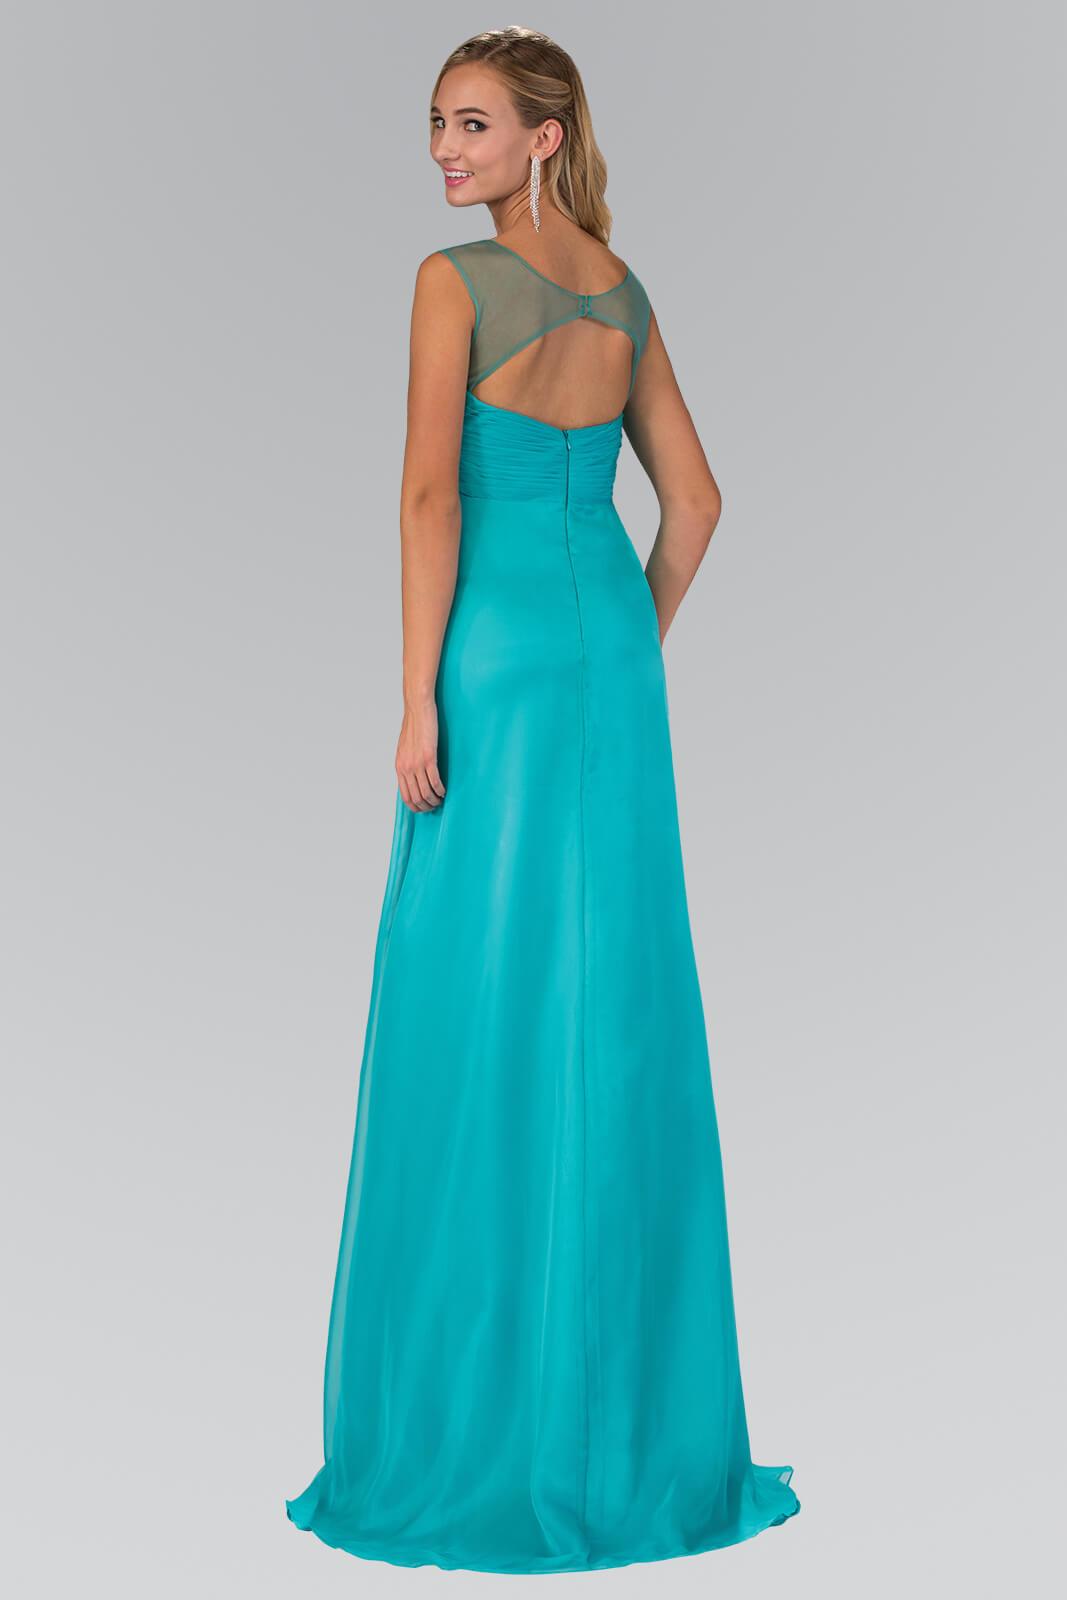 Prom Formal Dress Cap Sleeve Evening Long Gown - The Dress Outlet Elizabeth K